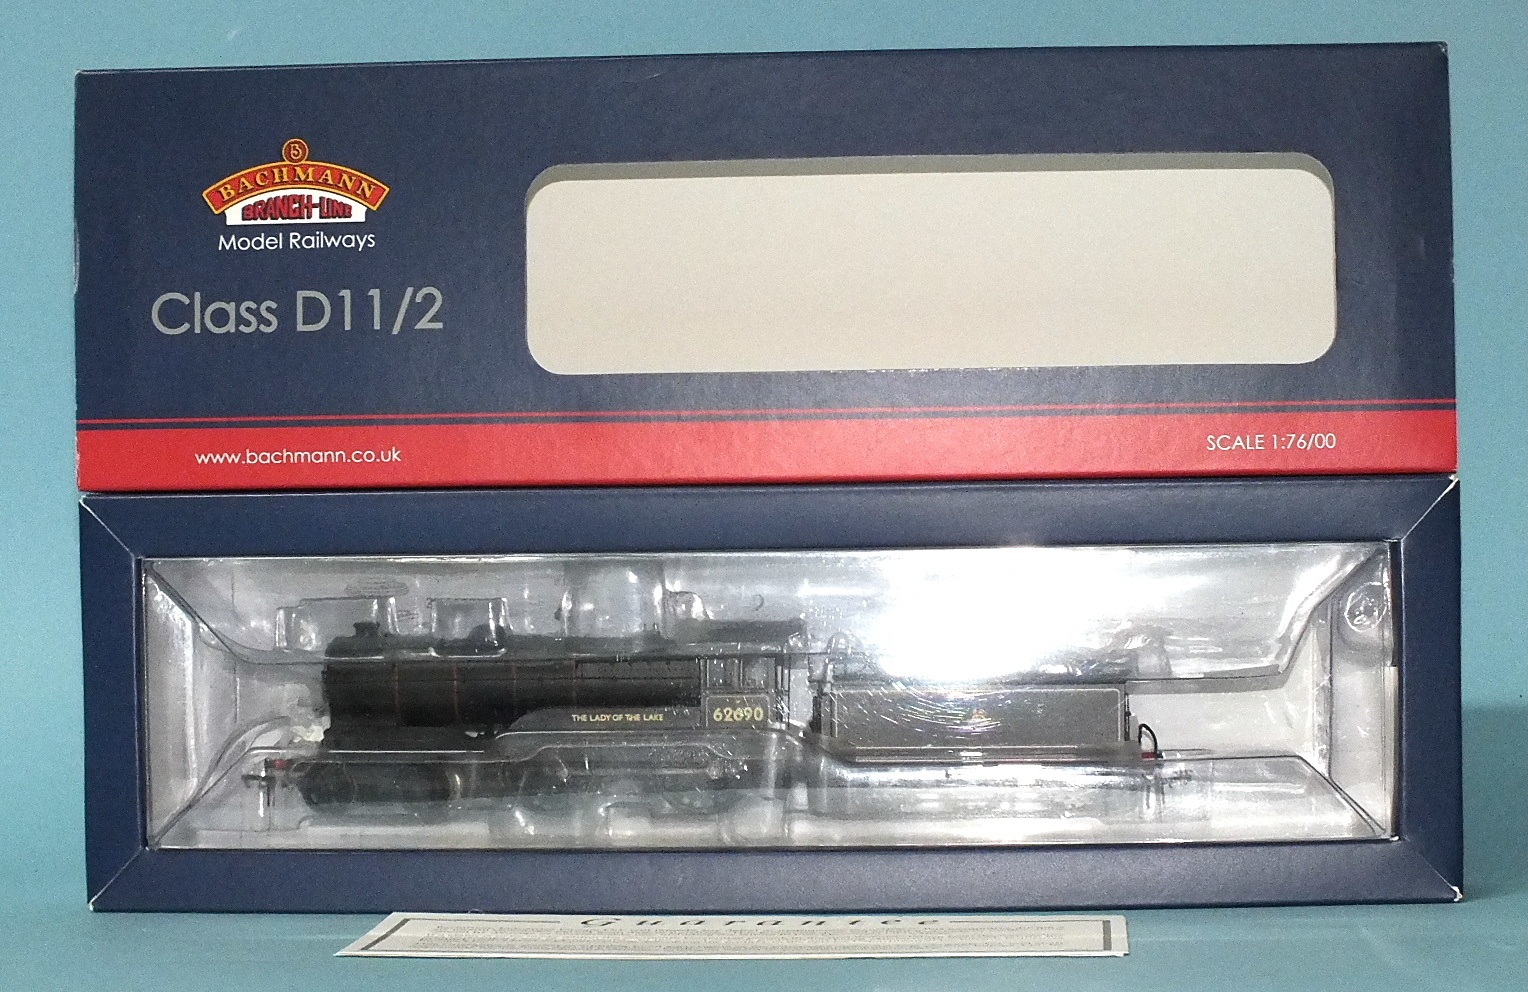 Bachmann OO gauge, 31-135 Class D11/2 4-4-0 BR black locomotive RN62690 "Lady of the Lake", (